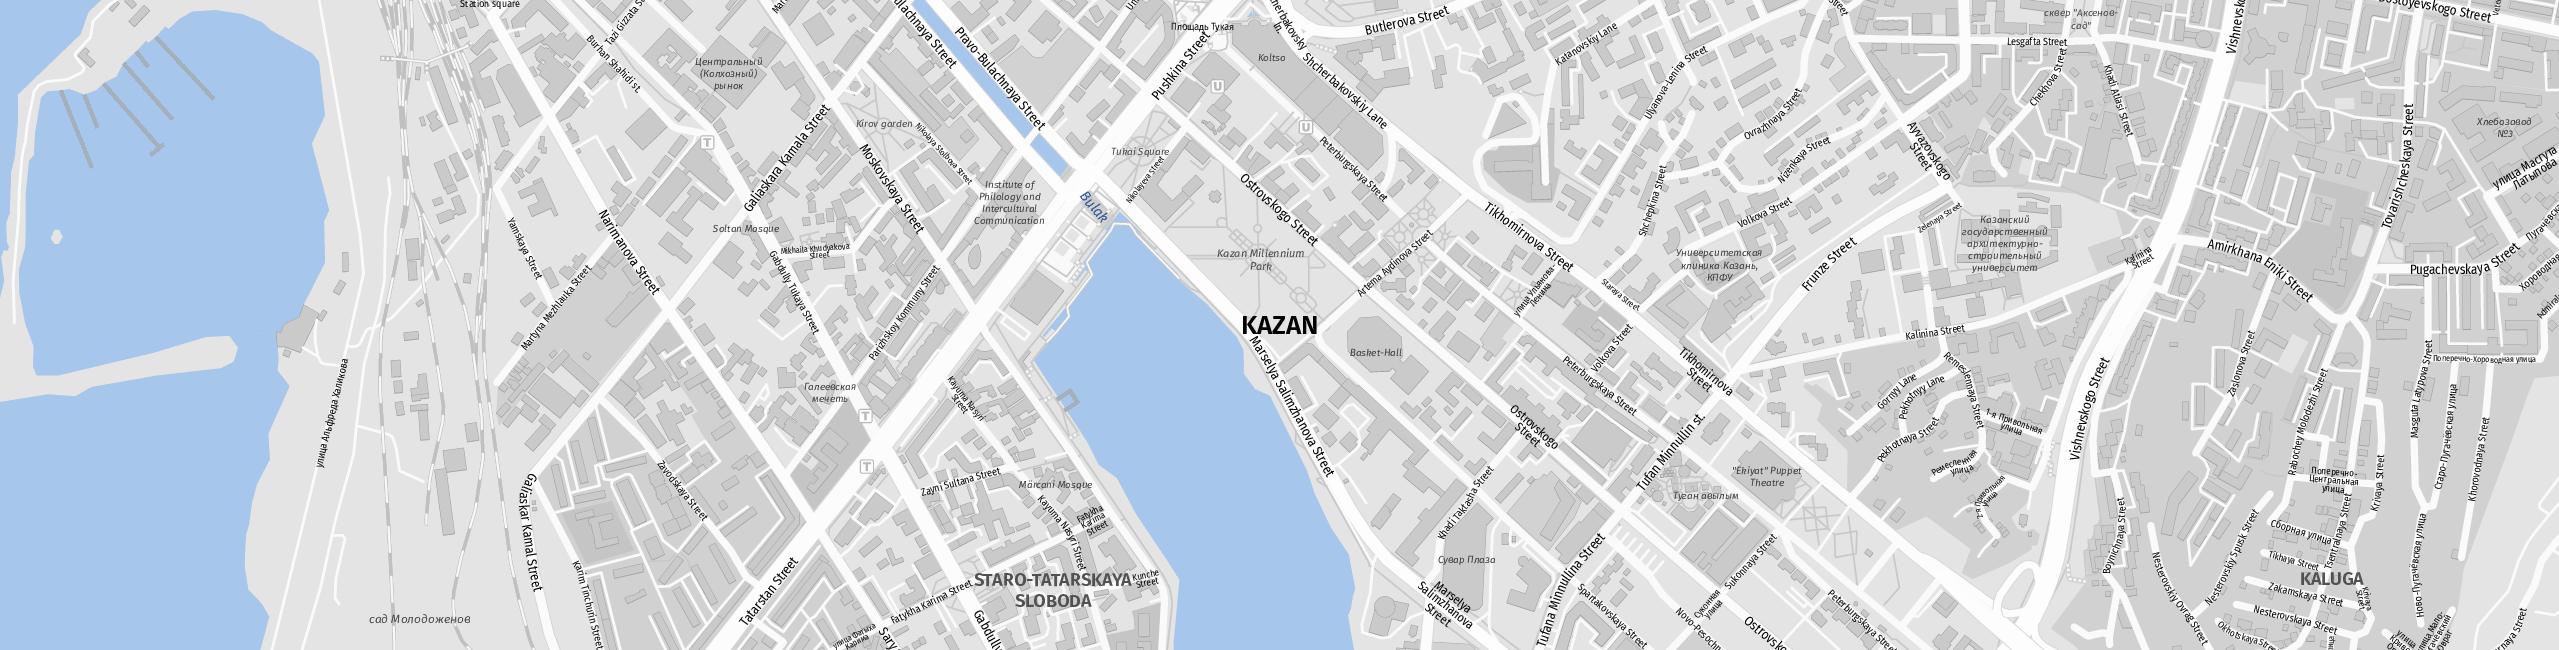 Stadtplan Kazan zum Downloaden.